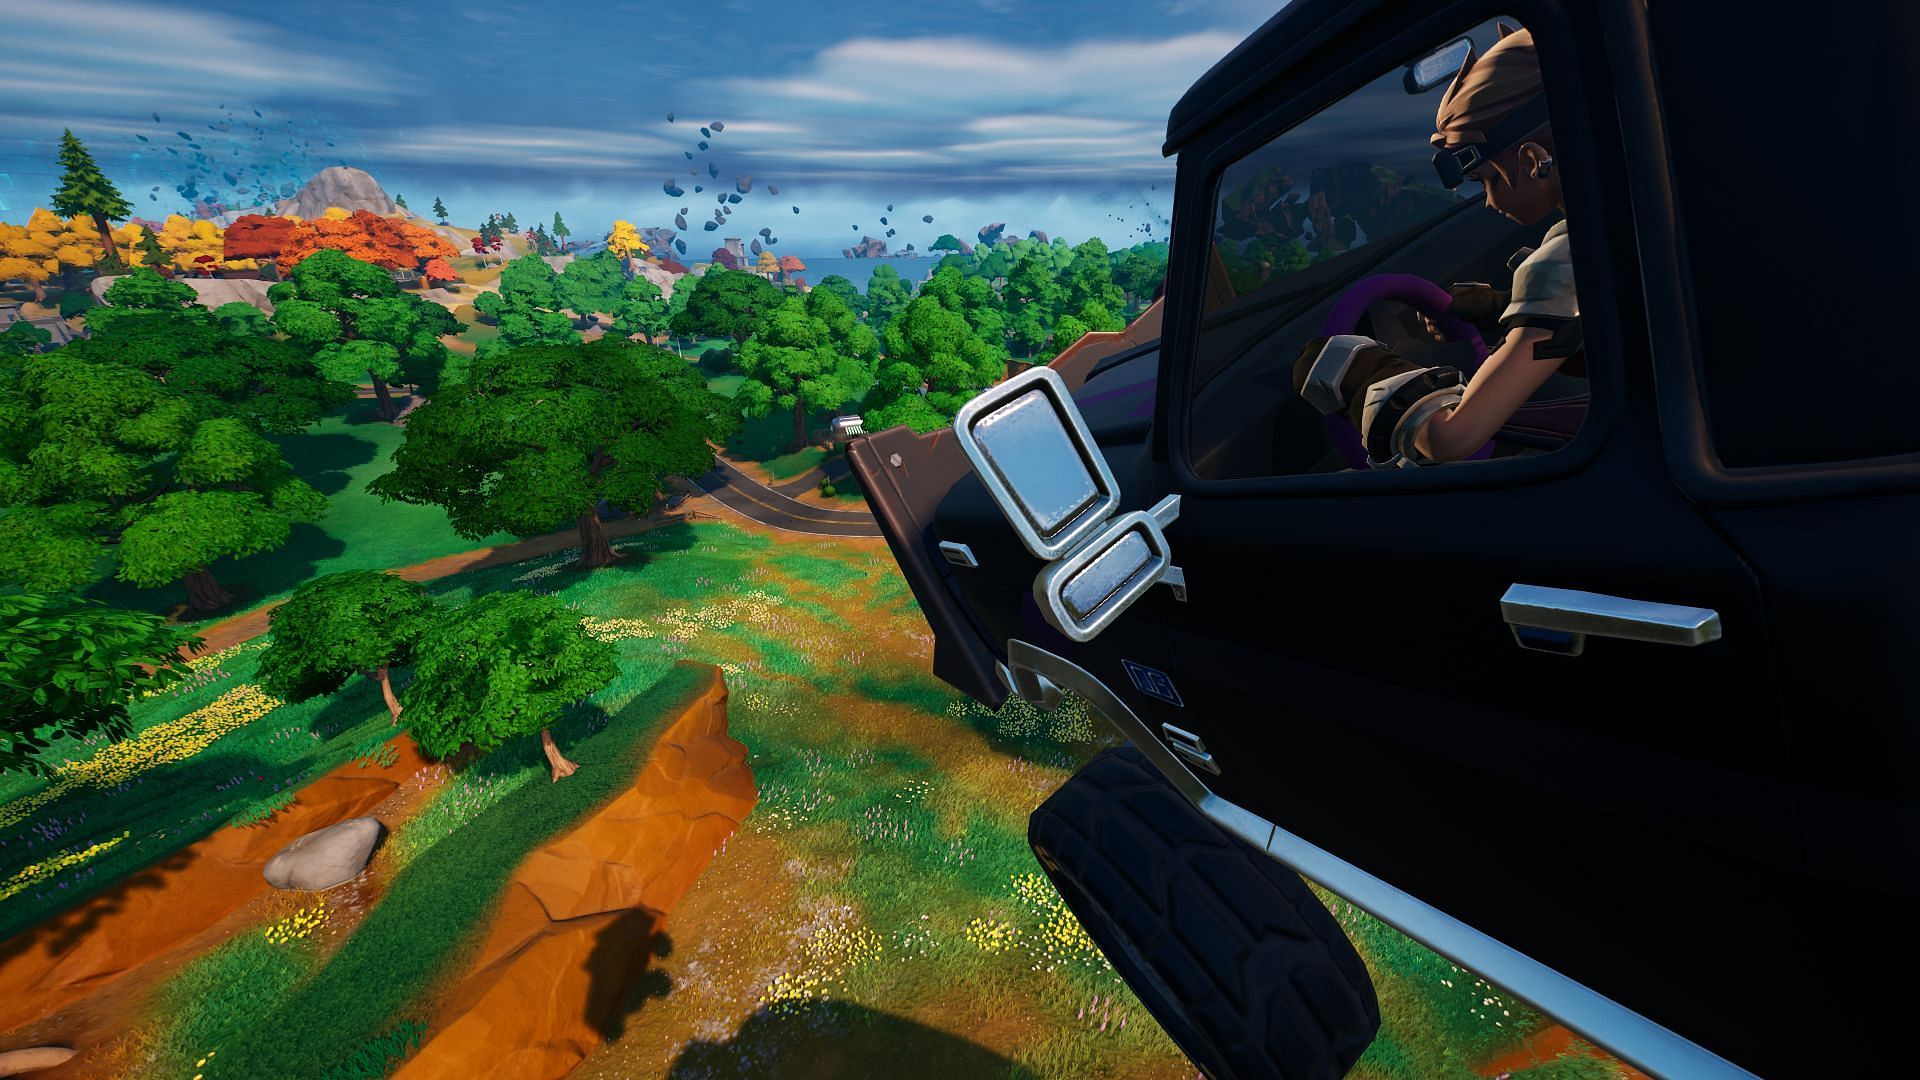 Fortnite Rocket Racing leaks suggest Death Race mode in development (Image via Epic Games/Fortnite)